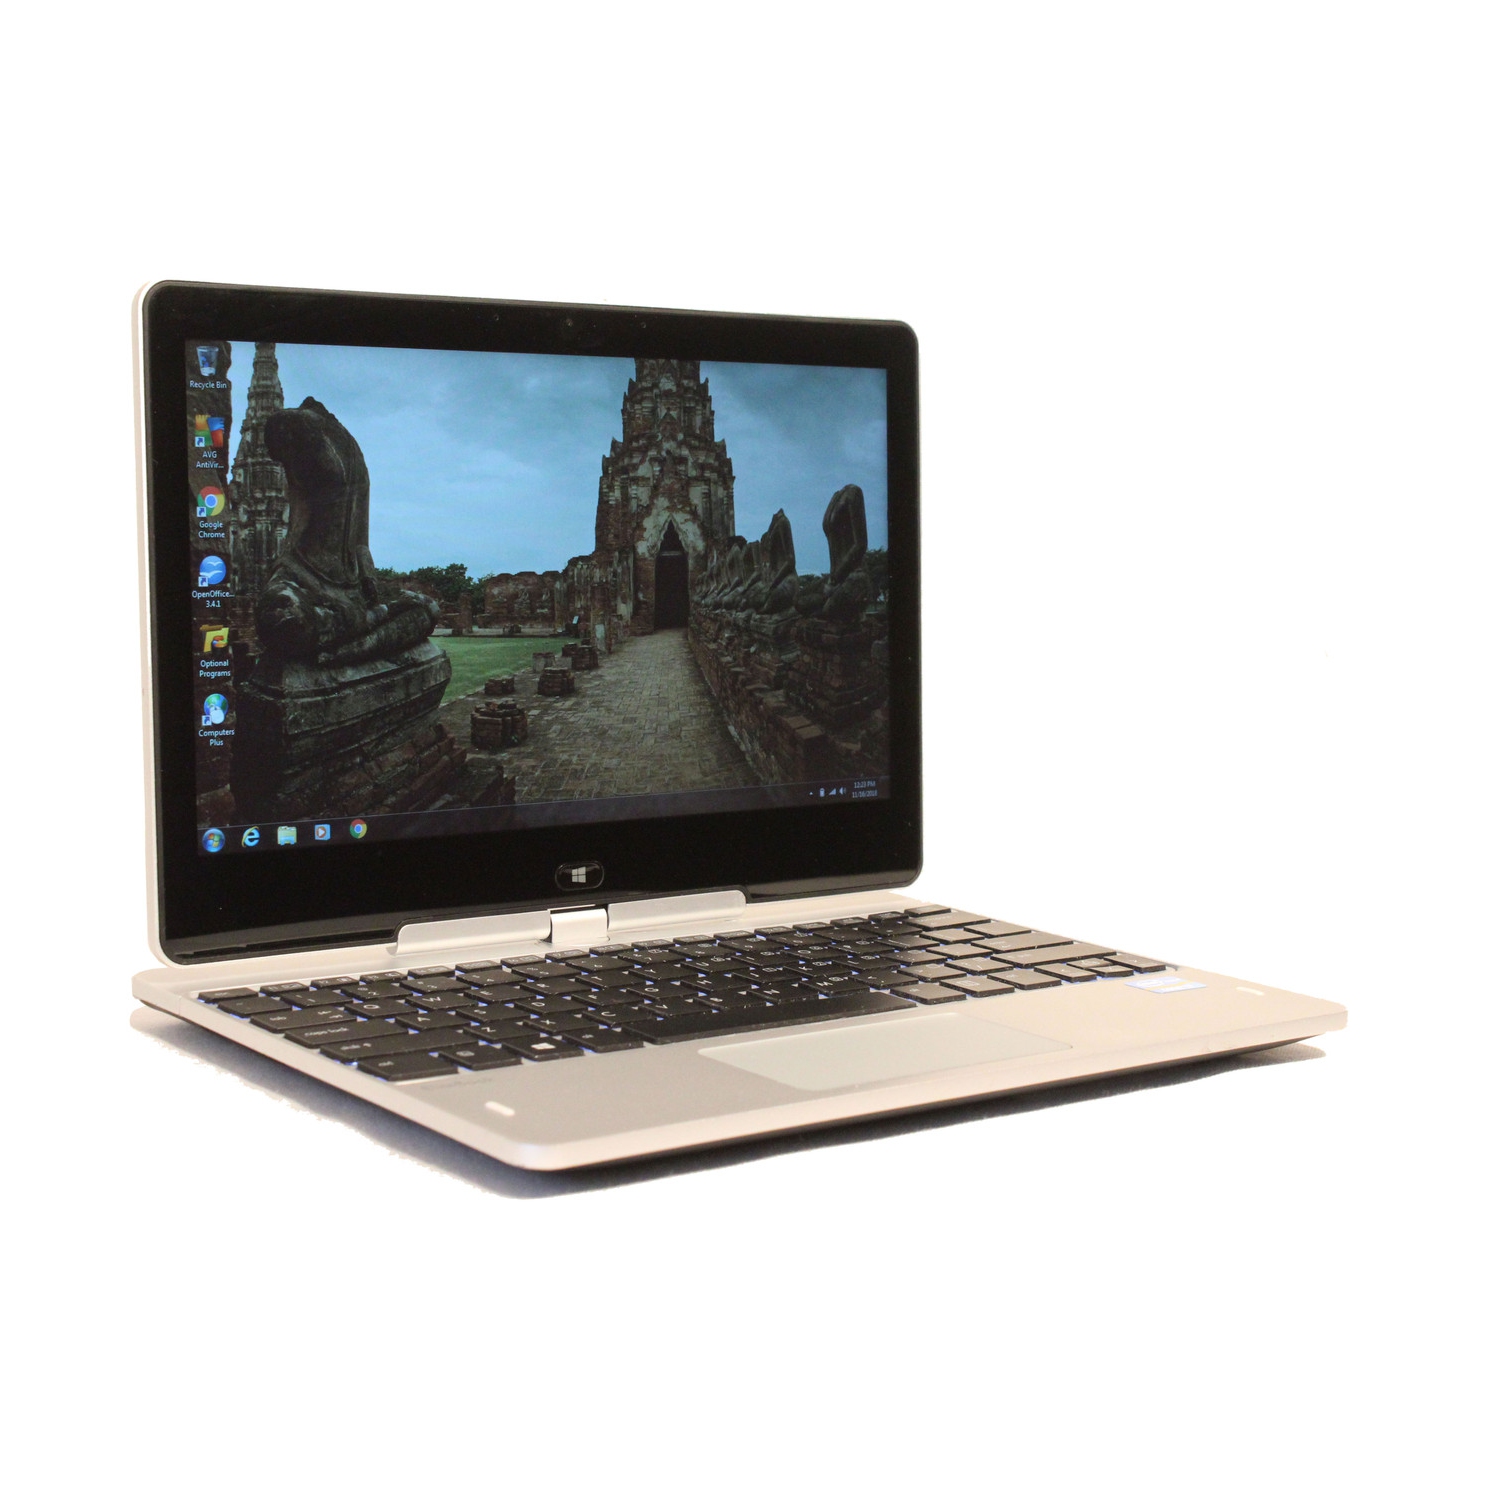 (Refurbished-Good) HP Elitebook Revolve 810 G3, 11.6" Convertible Laptop/Tablet, Core i5 5th Gen (2.3Ghz), 8Gb RAM, 256Gb SSD, Windows 10